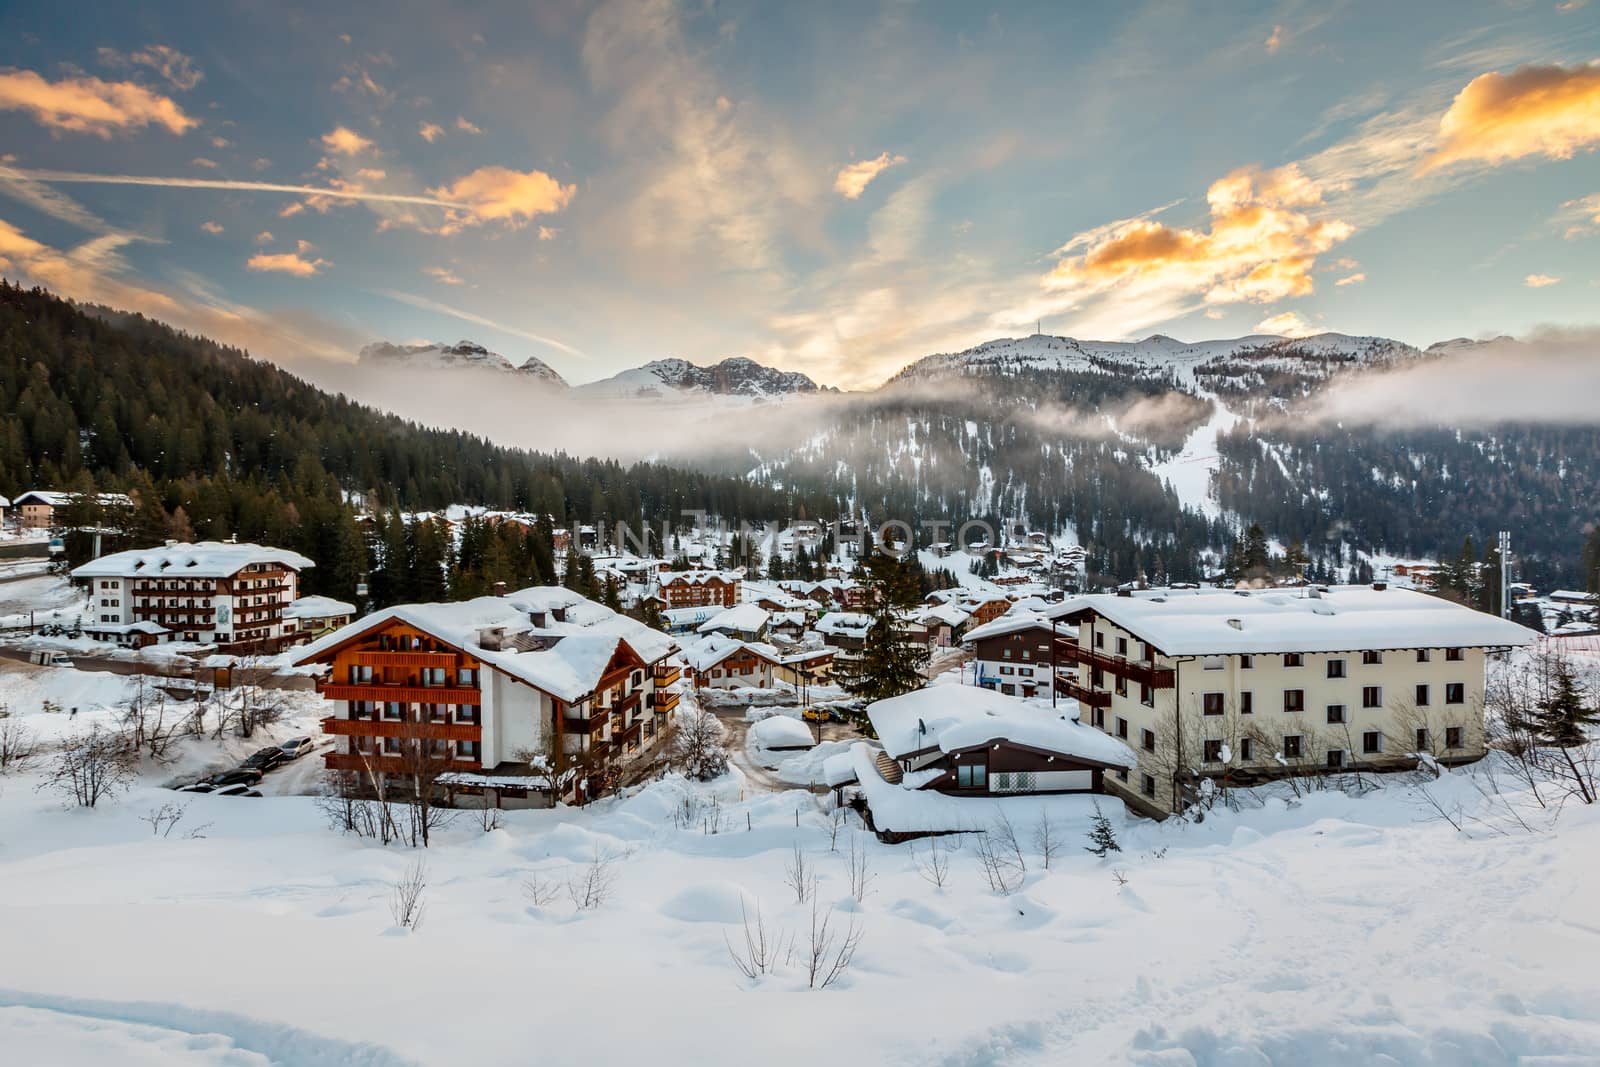 Ski Resort of Madonna di Campiglio in the Morning, Italian Alps, by anshar